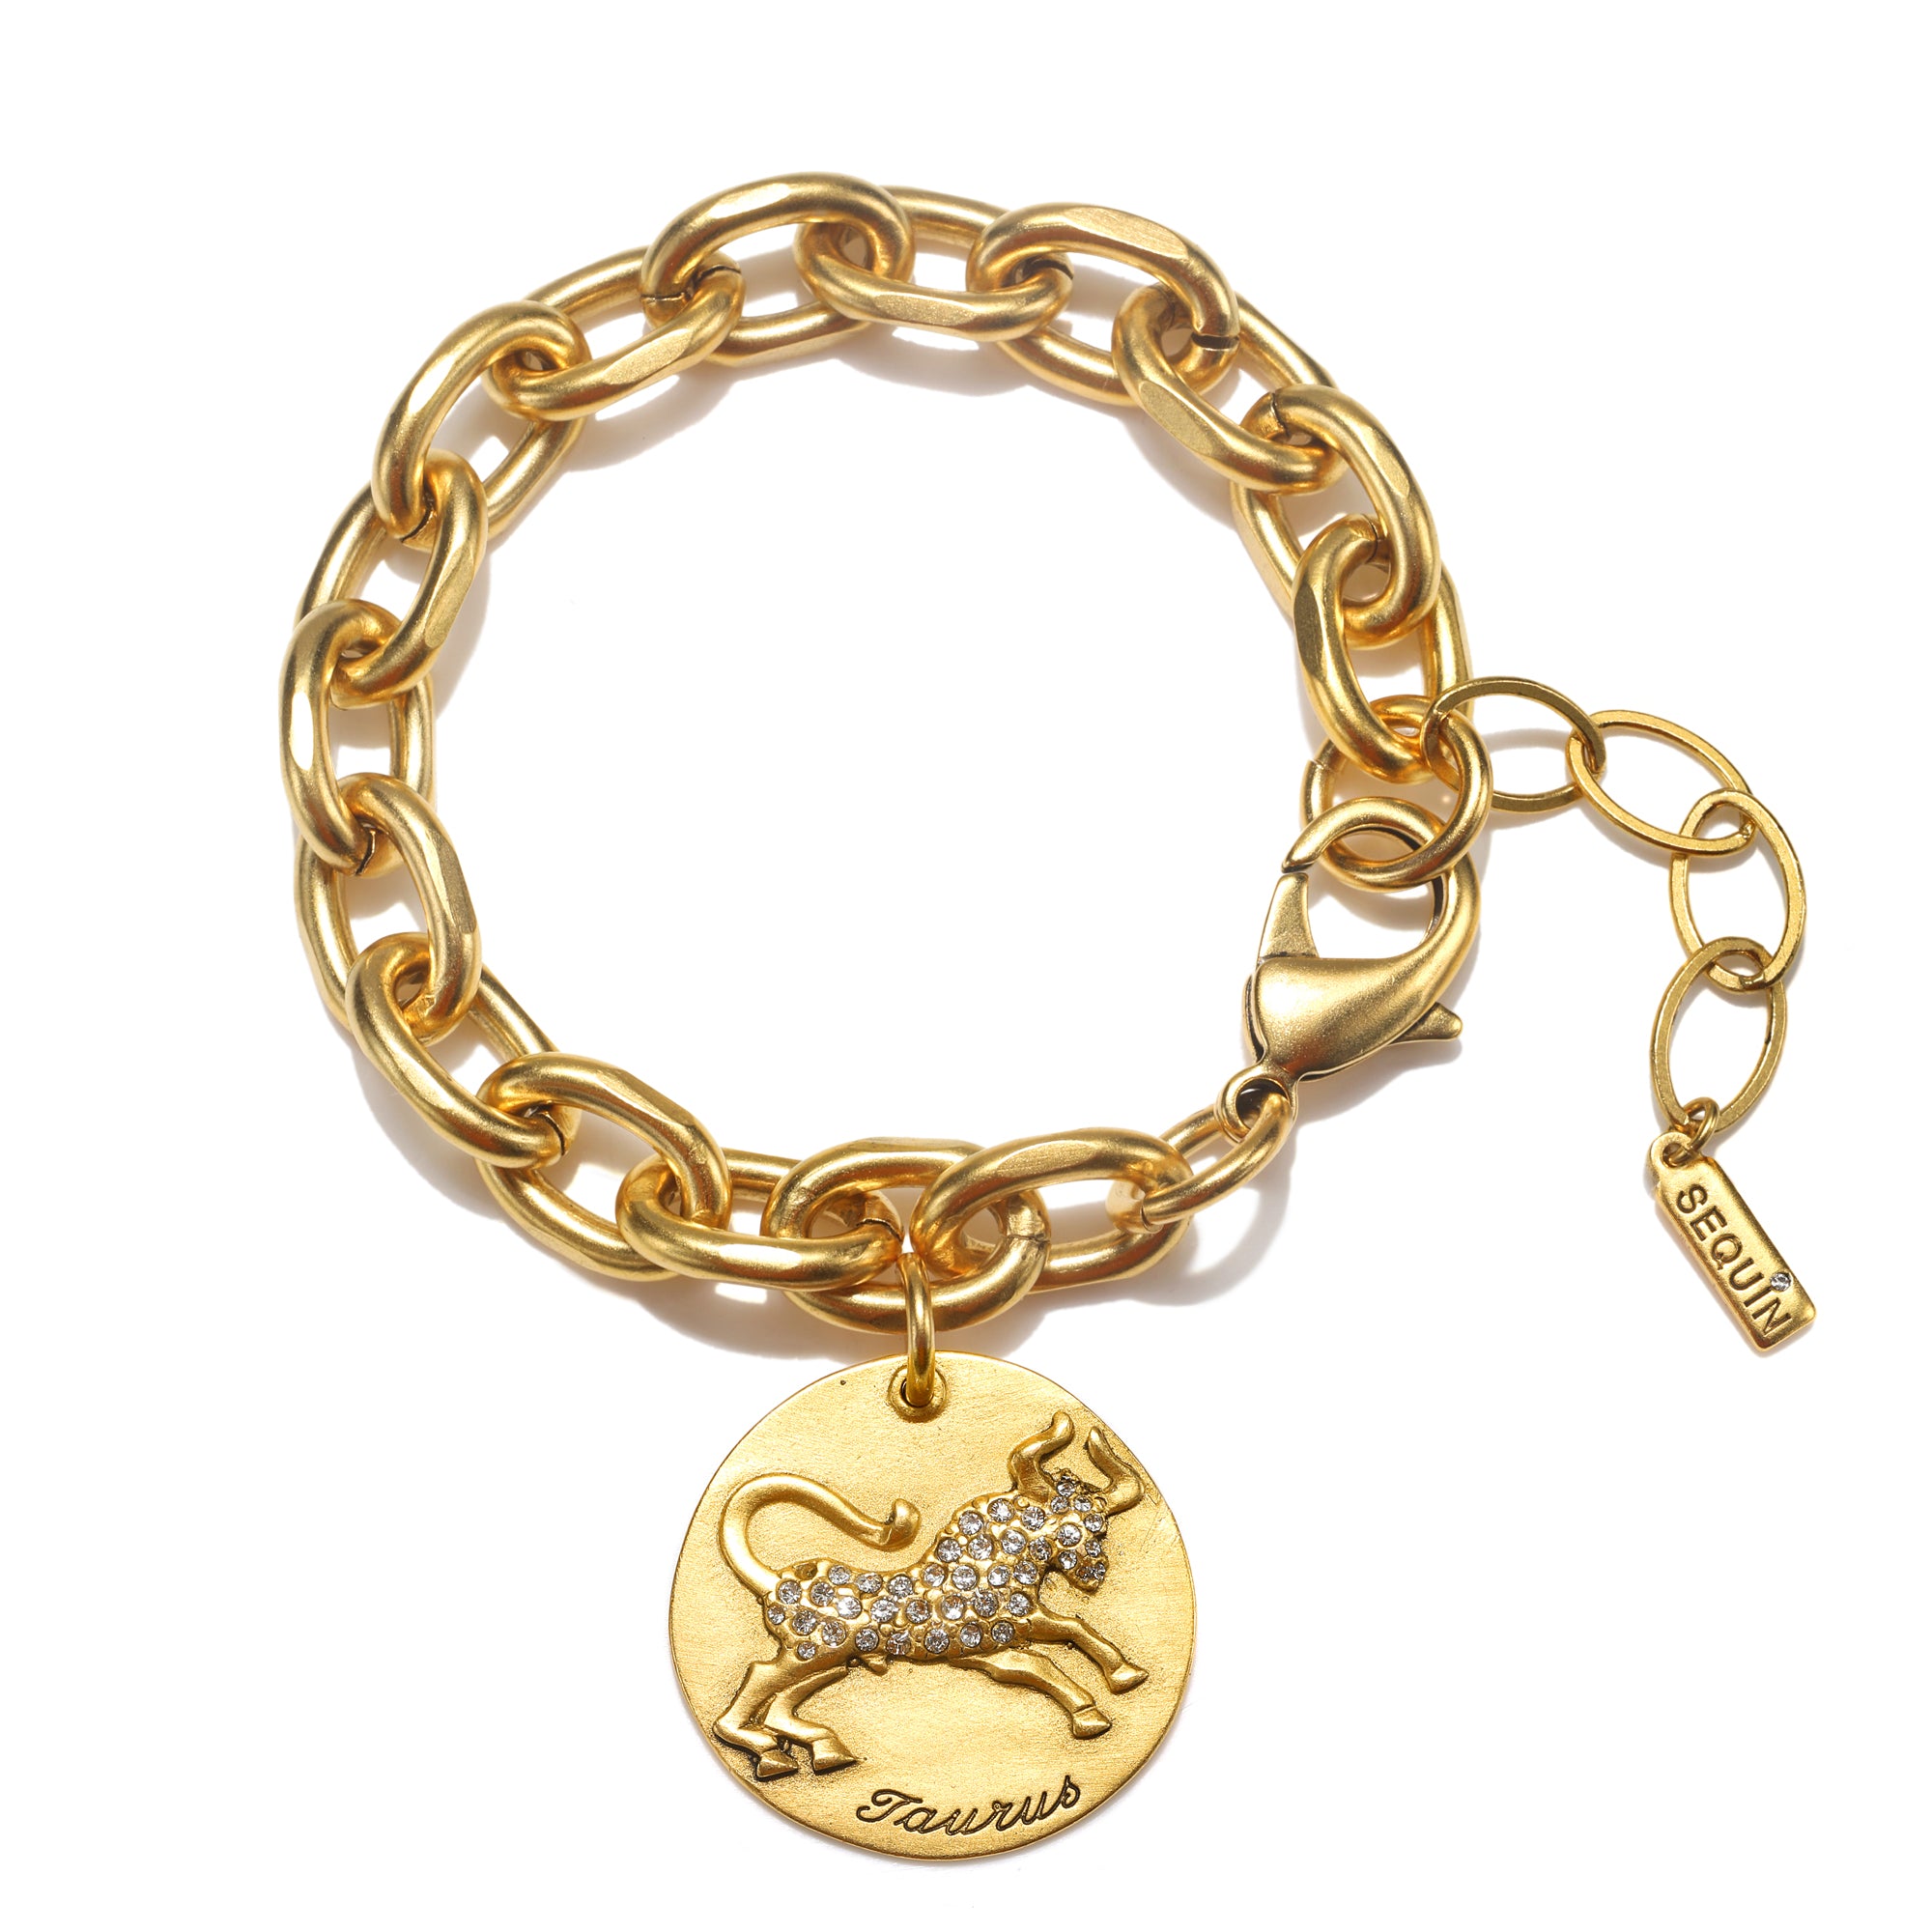 Rubans 22K Gold plated 925 Sterling Silver Star Charm minimal Bracelet